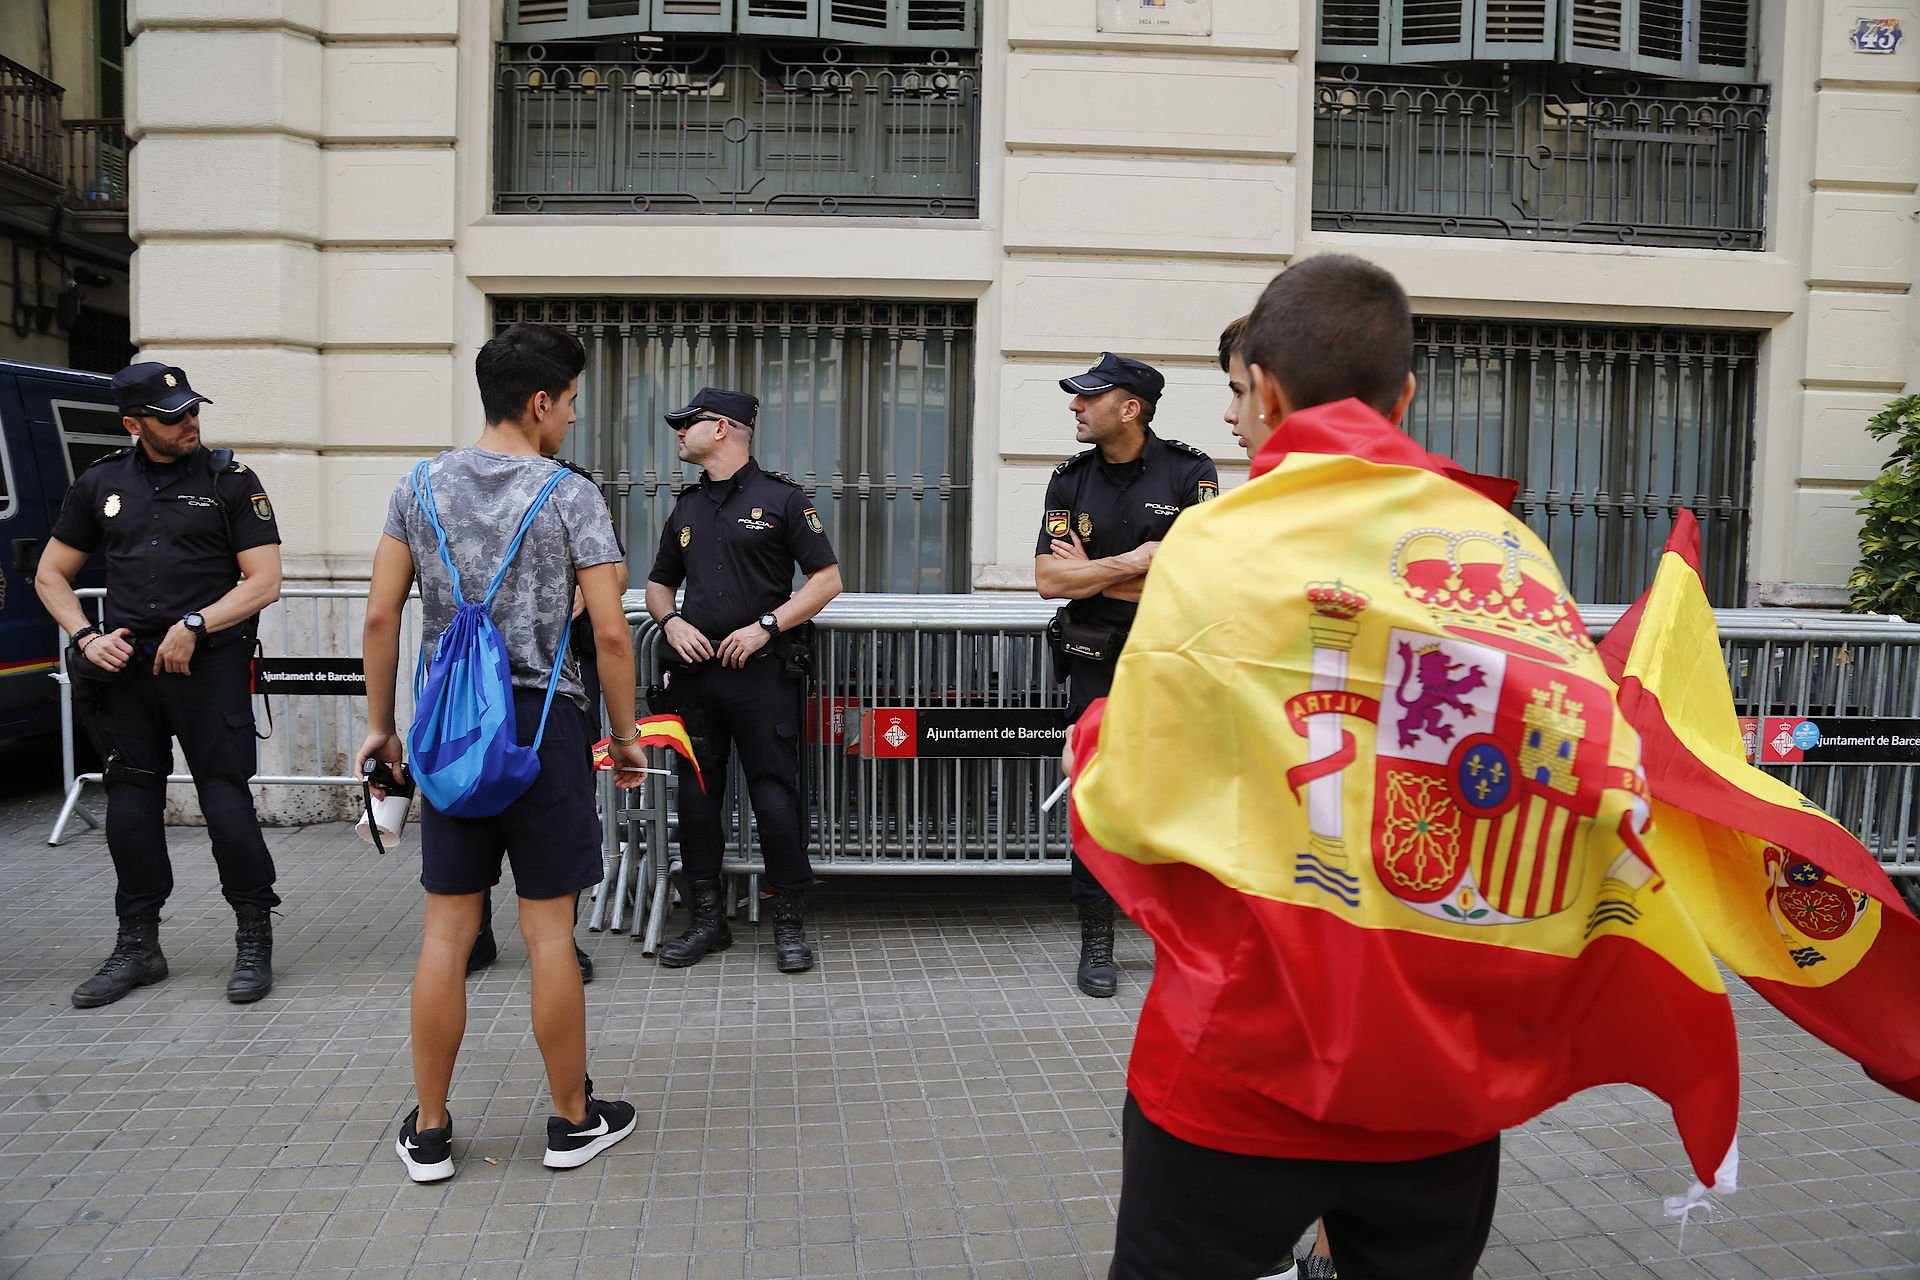 La policia espanyola s’ho veu a venir: recull firmes per no marxar de Laietana